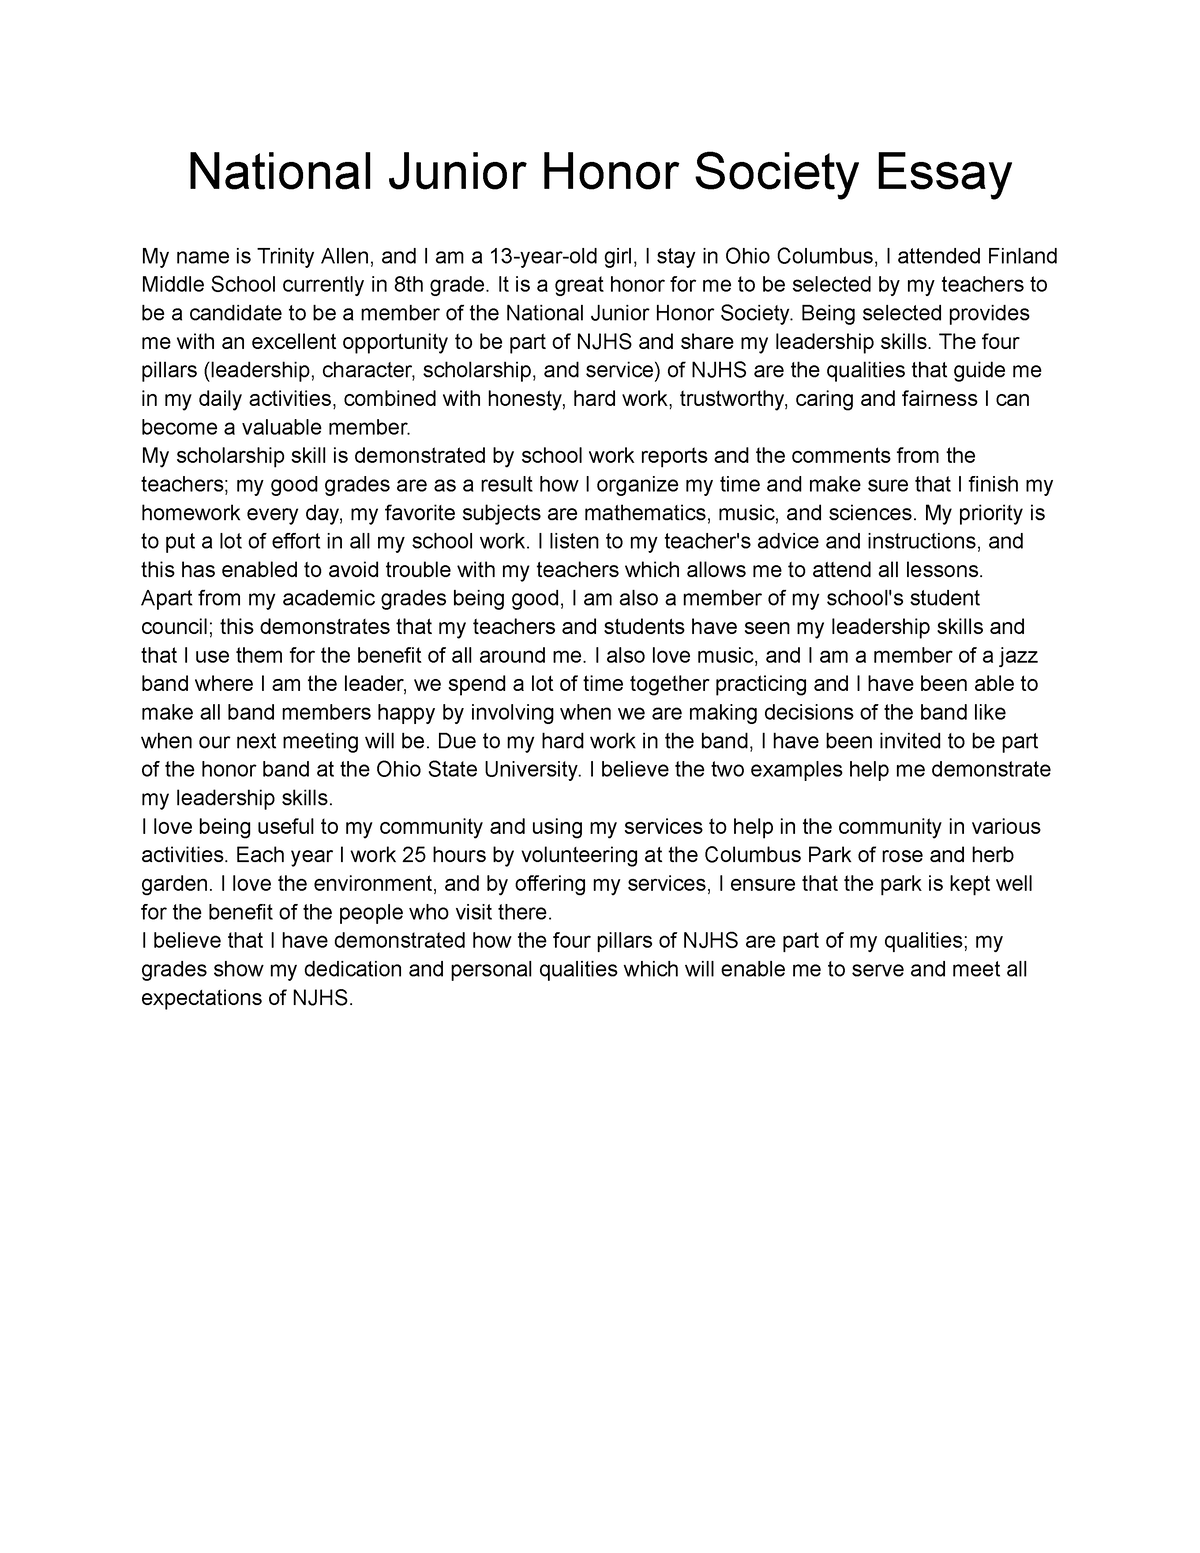 writing a national honor society essay